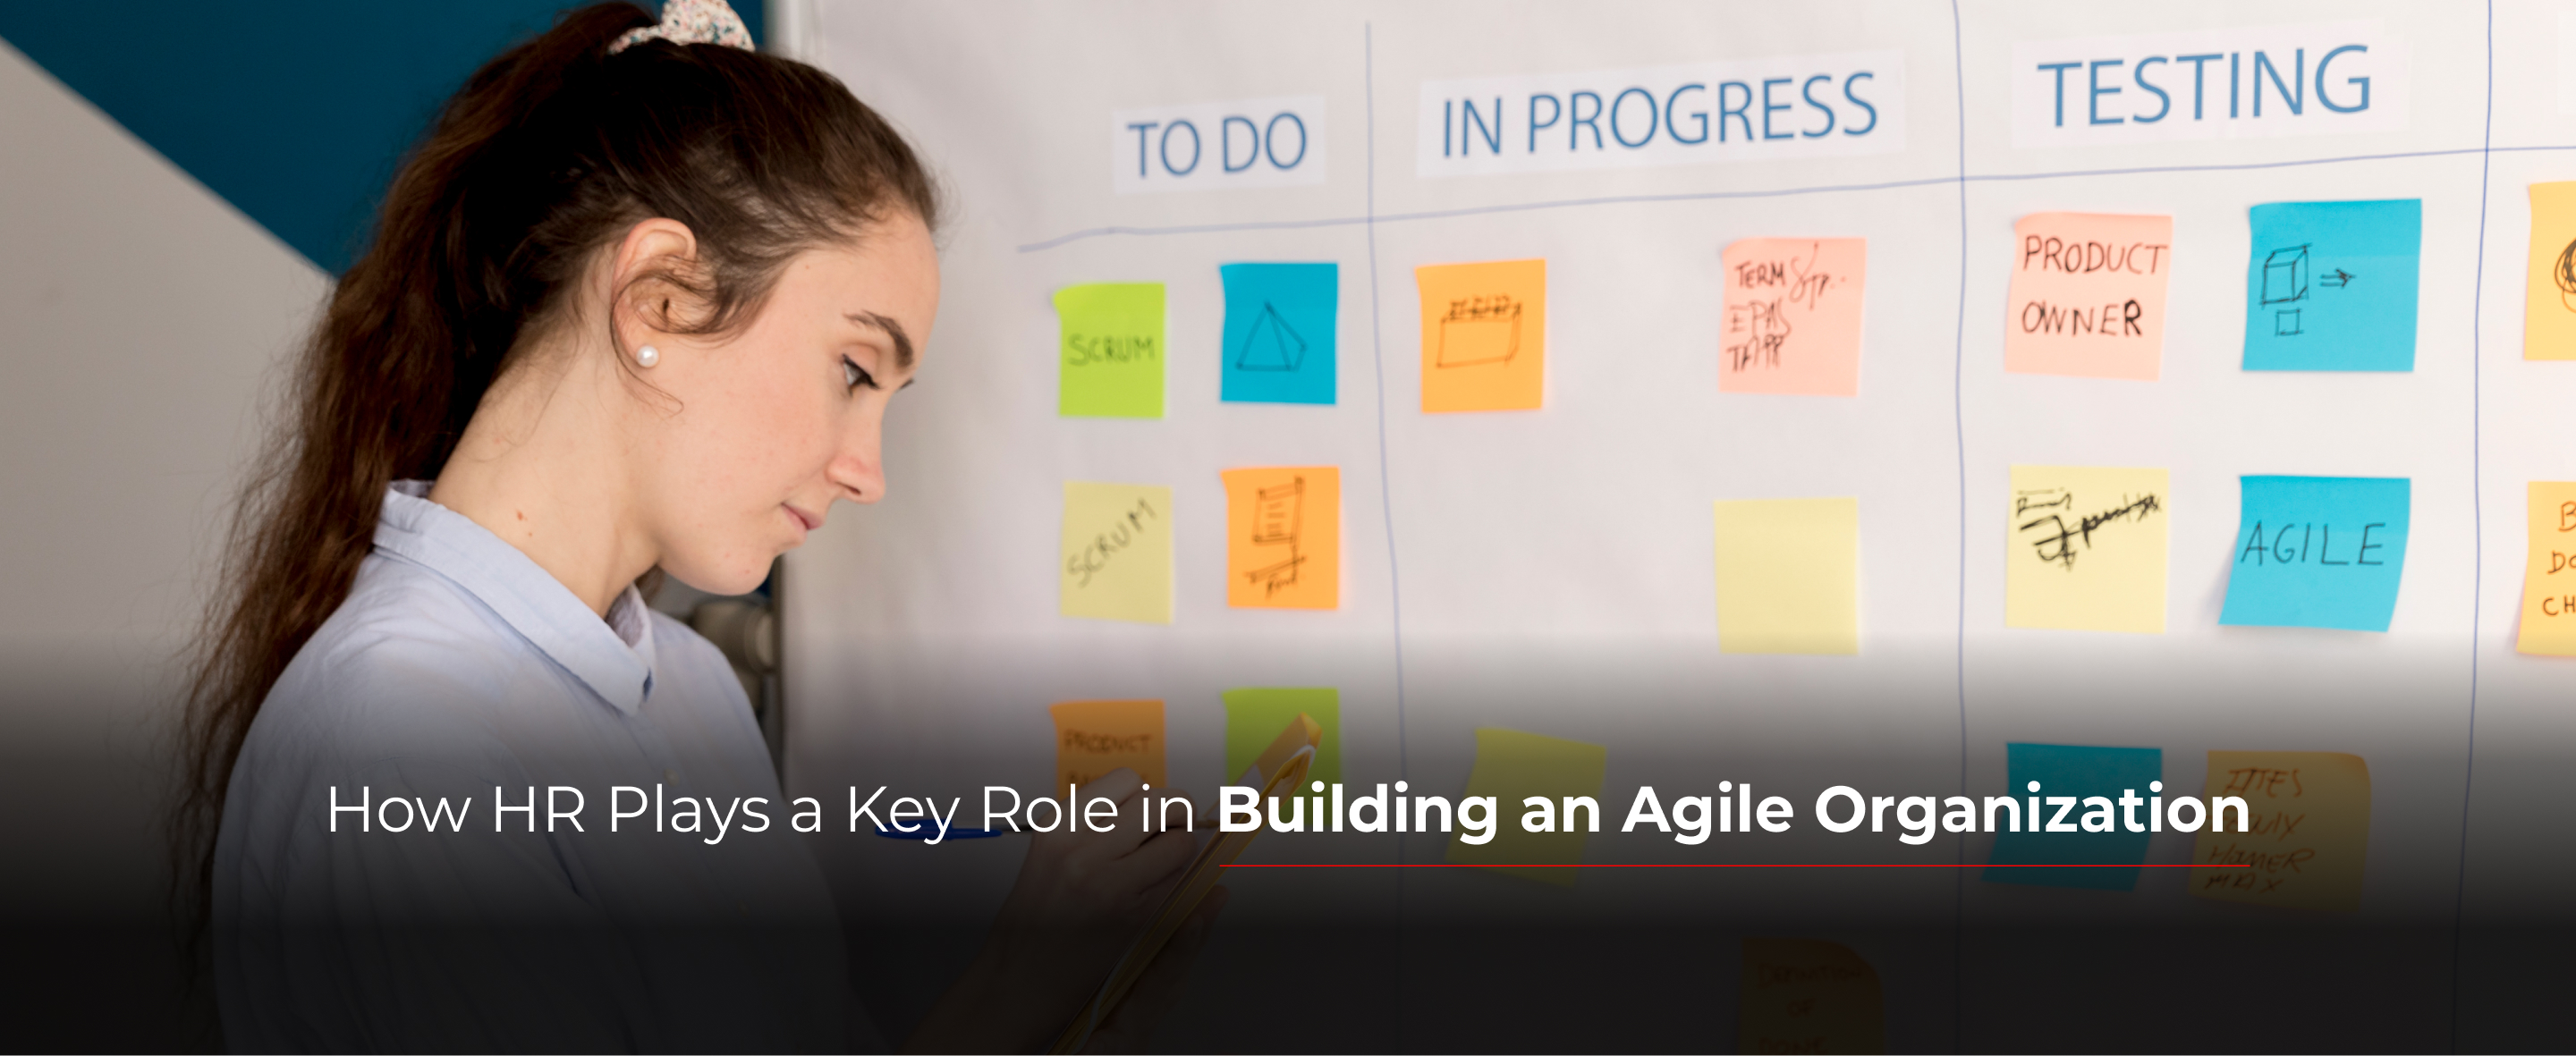 How HR Plays a Key Role in Building an Agile Organization